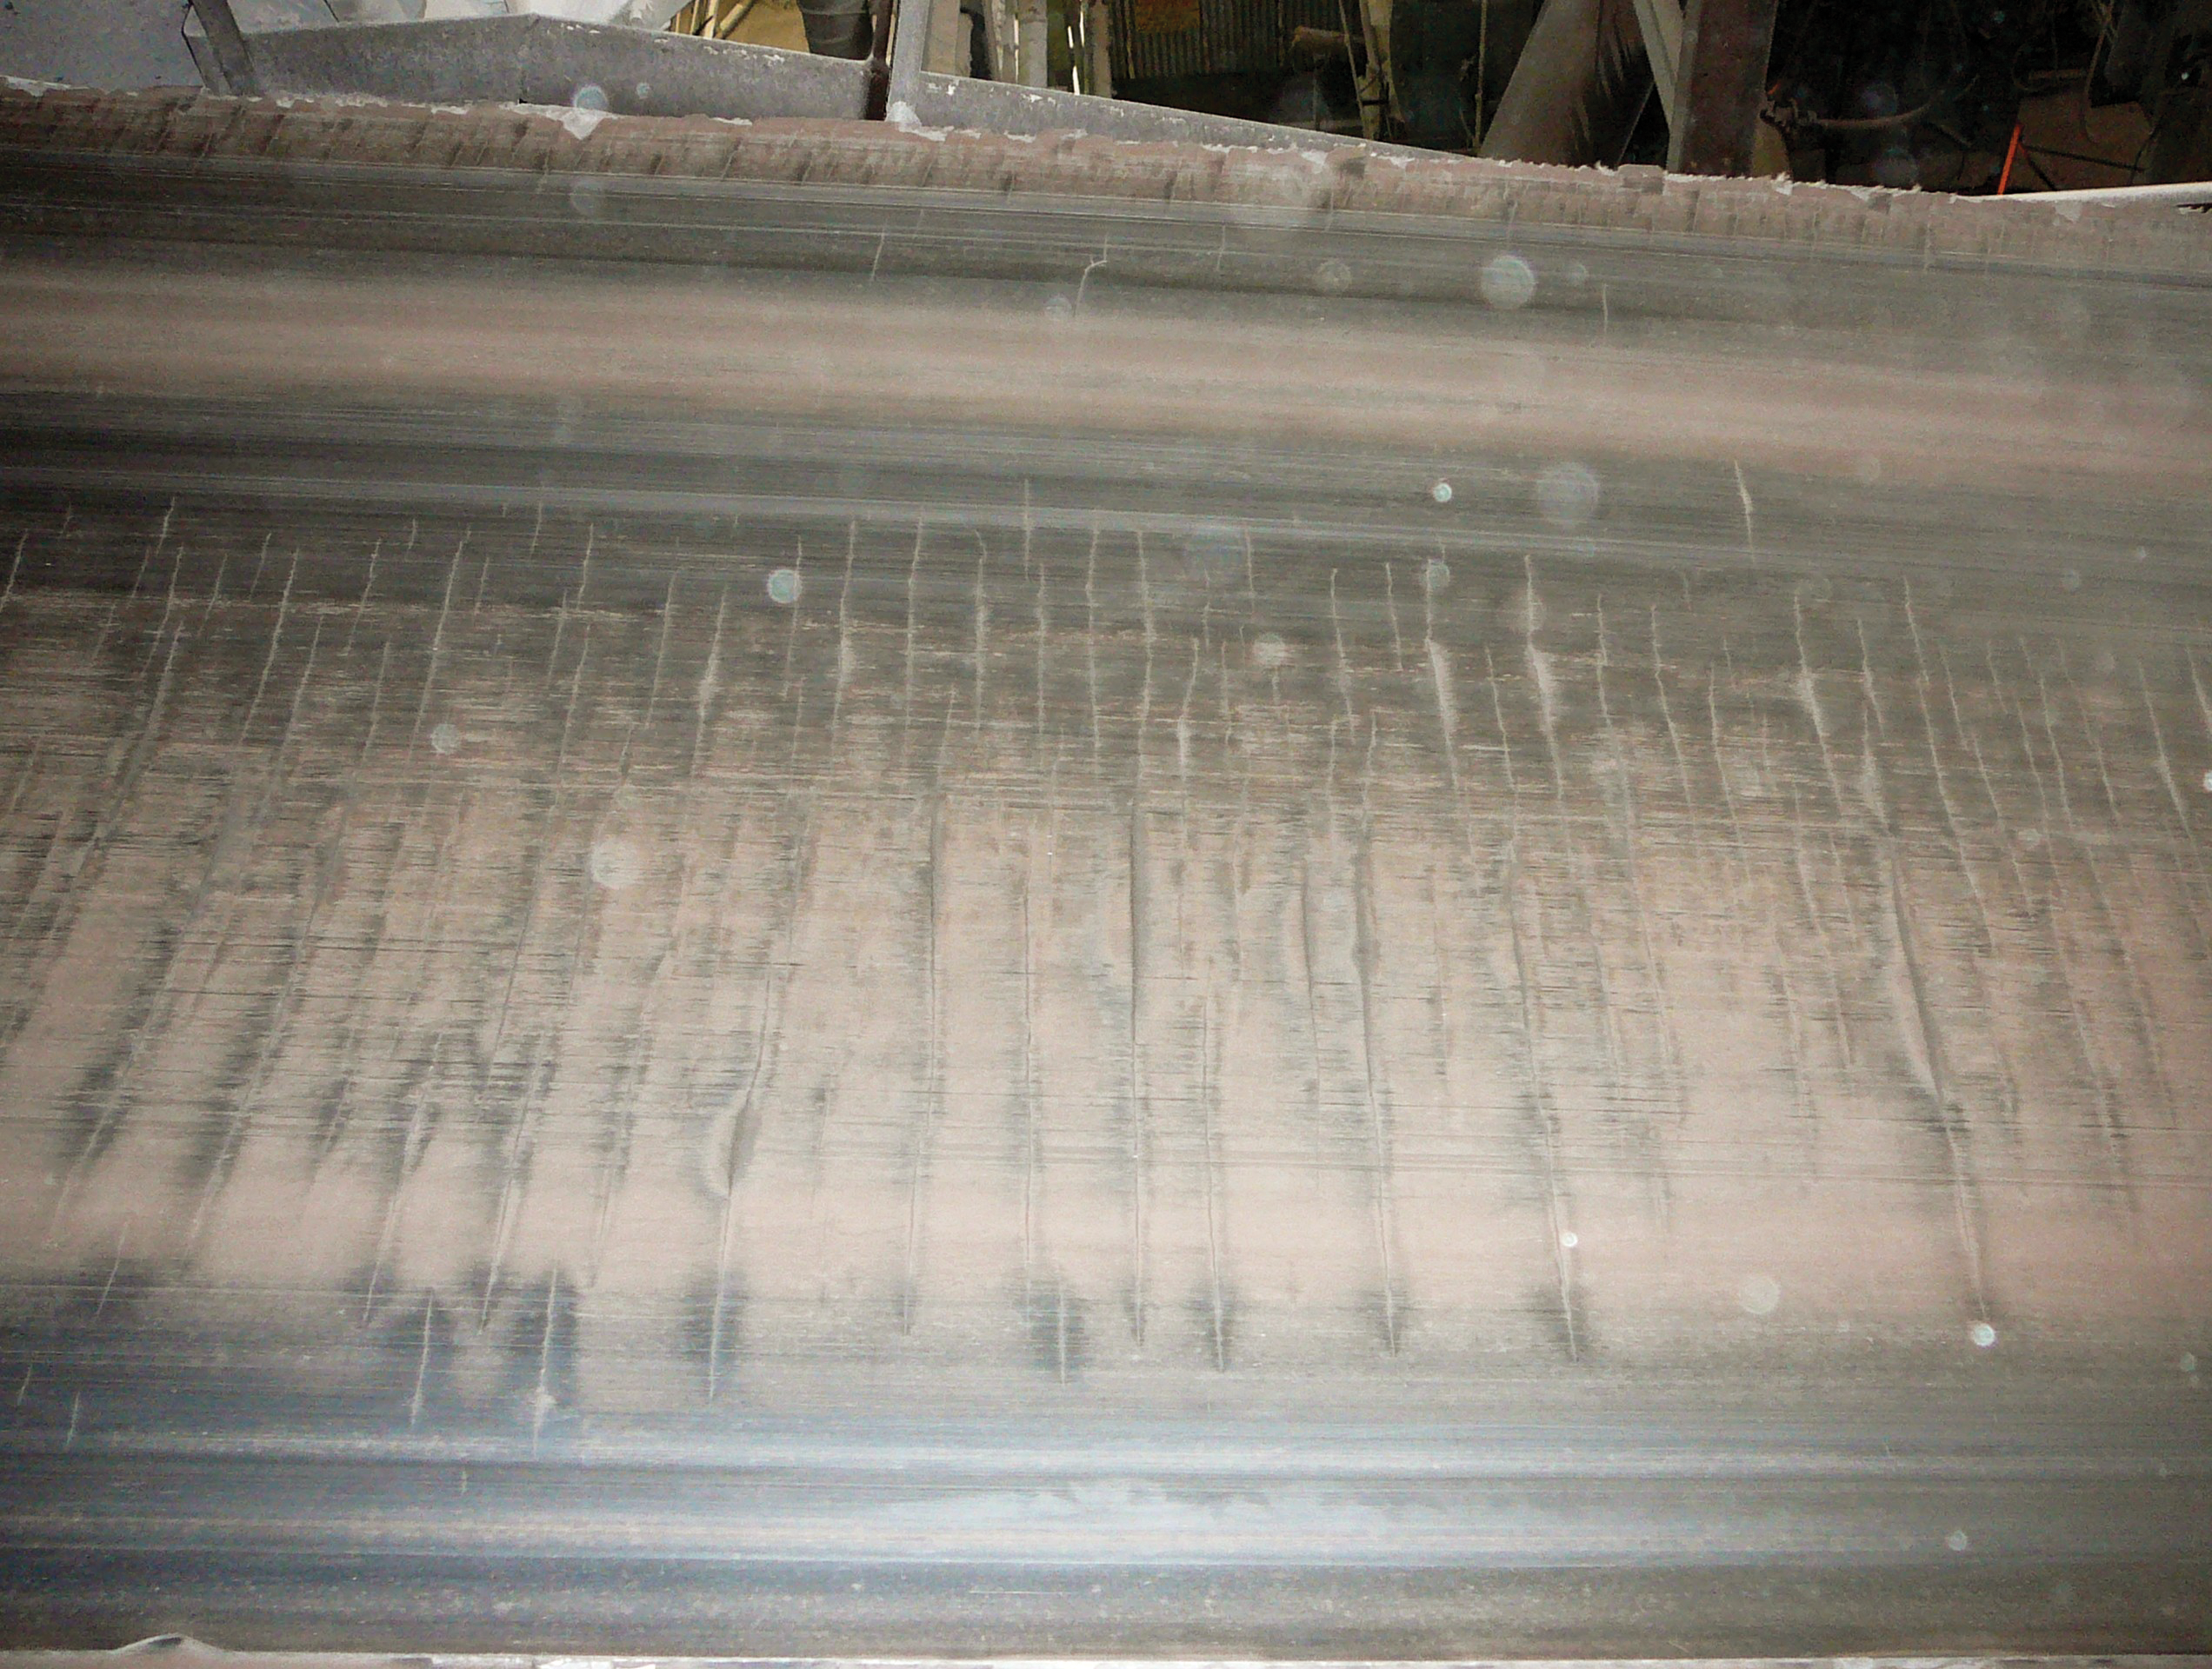 Conveyor belt top cover cracking.